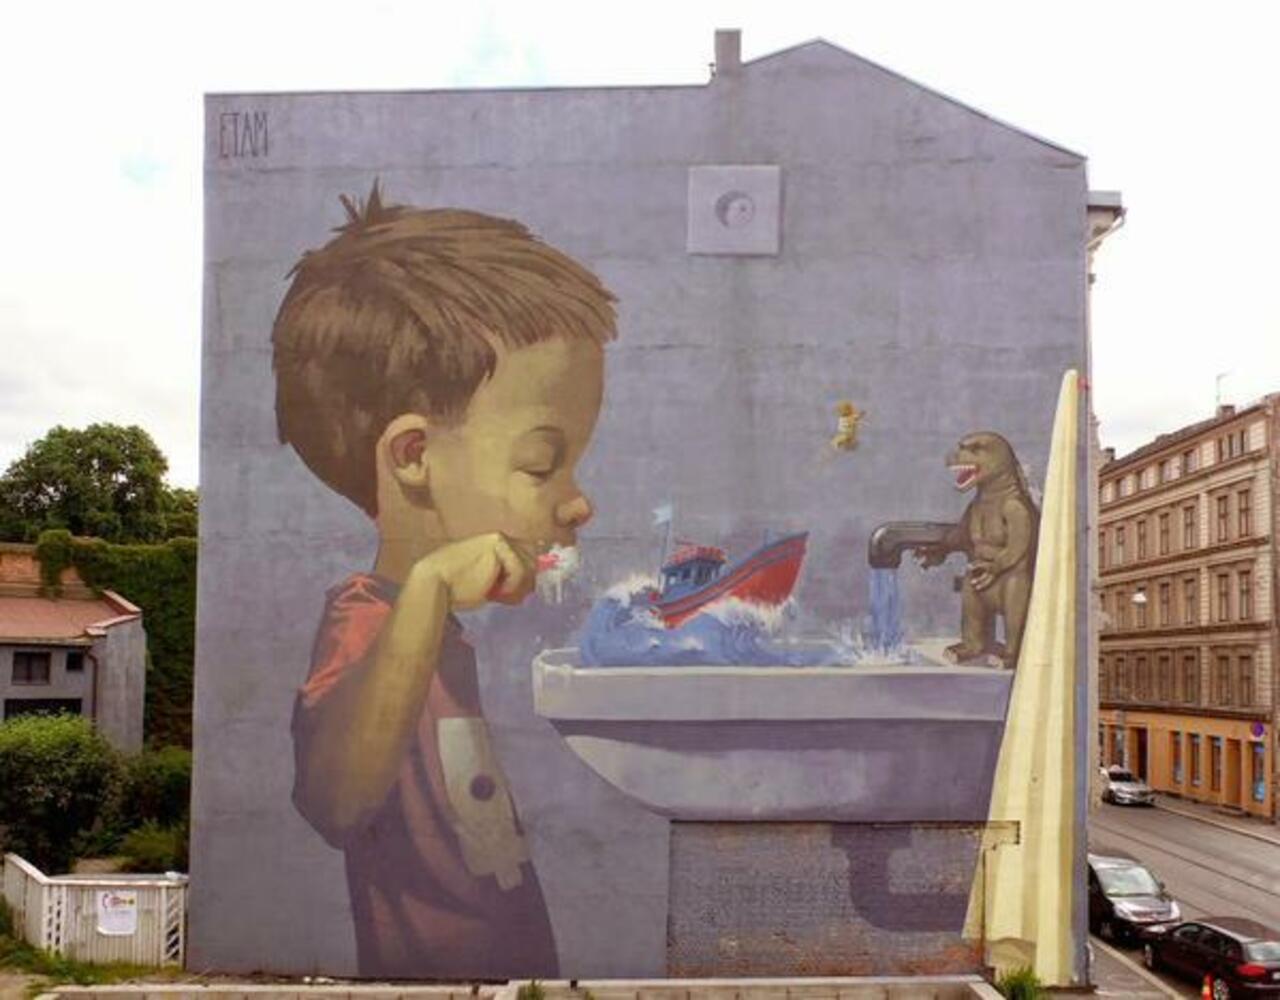 RT @ErkenciTayfa #streetart #graffiti #sprayart  #urbanart #urbanwalls in Oslo by Etam Cru http://t.co/RG0LnFMoFr